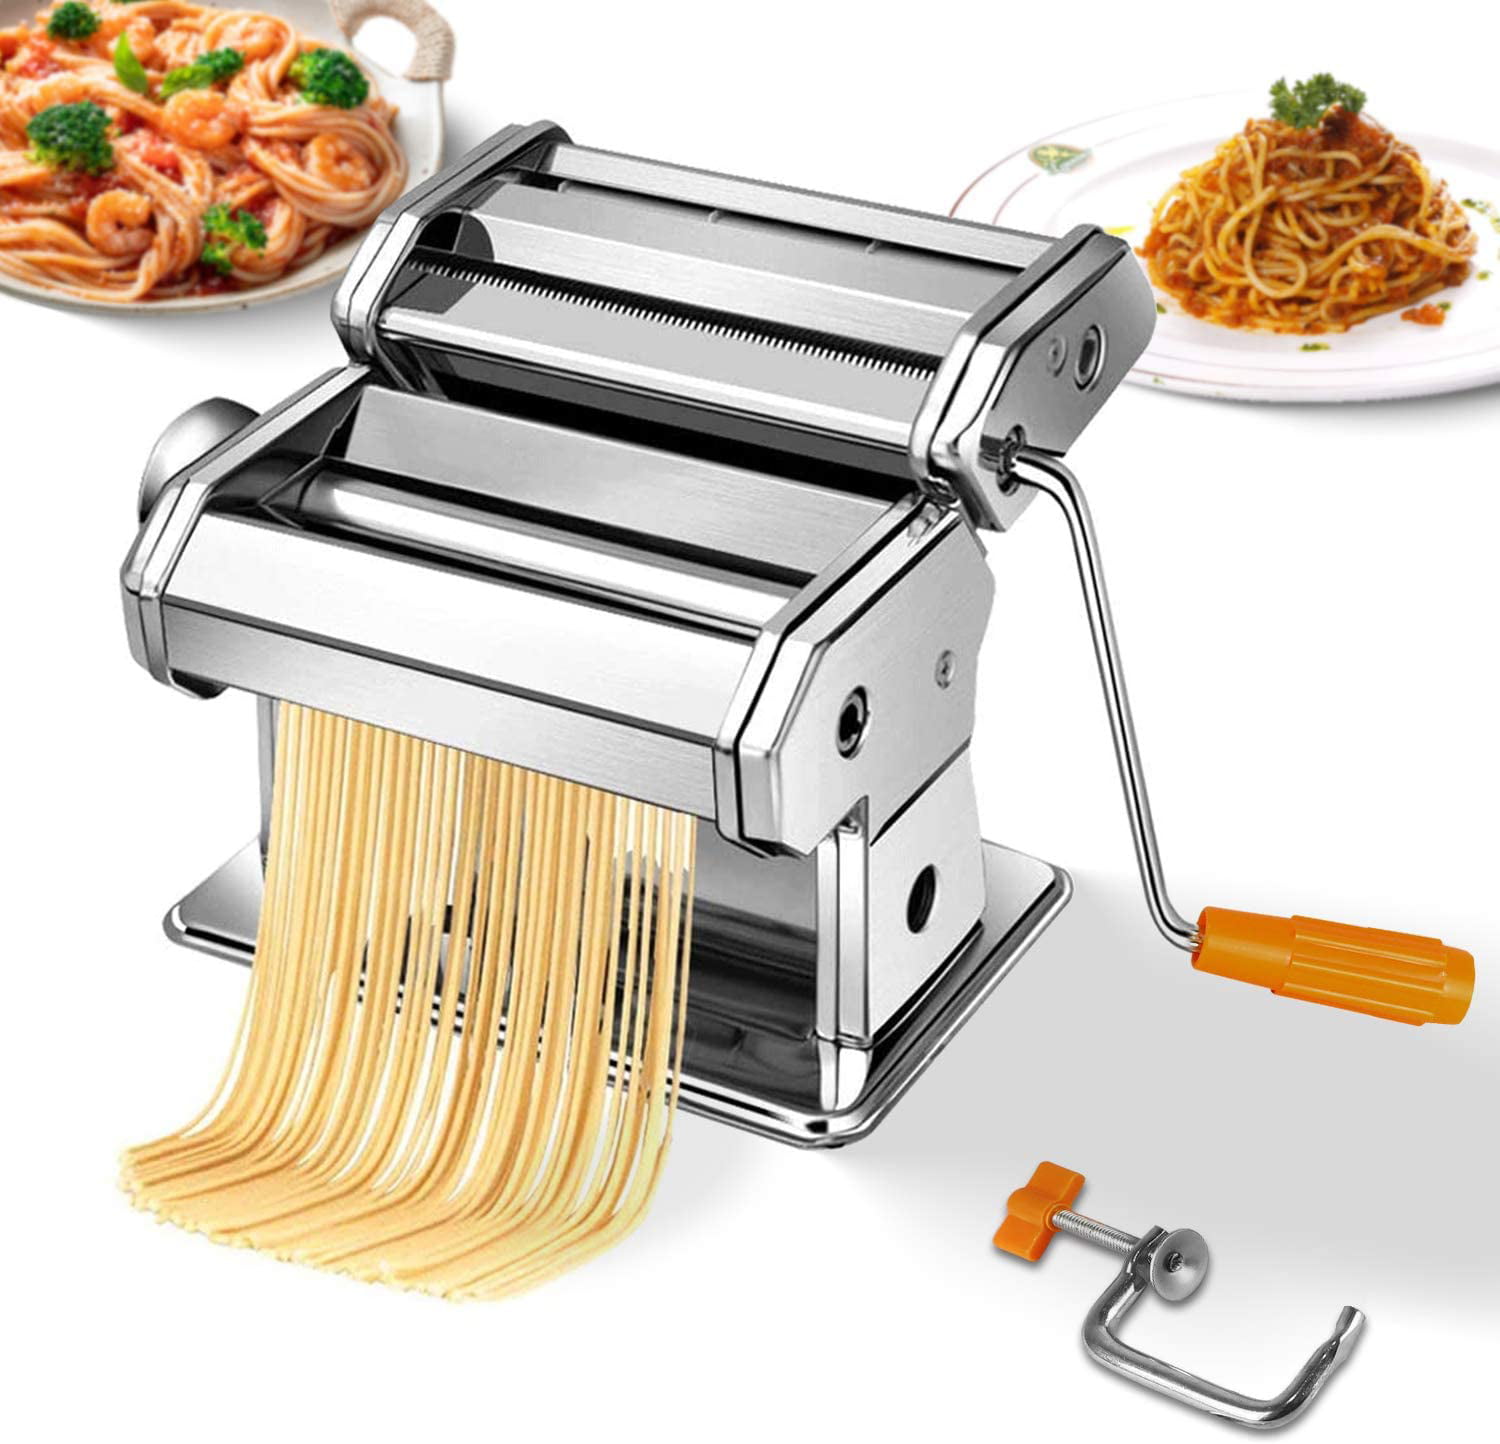 benefit-X Noodle Maker Multi-Function Stainless Steel Manual Dough Pressing Machine Pasta Maker Pasta Machine Fettuccini Lasagna for Spaghetti Dumpling Skins 